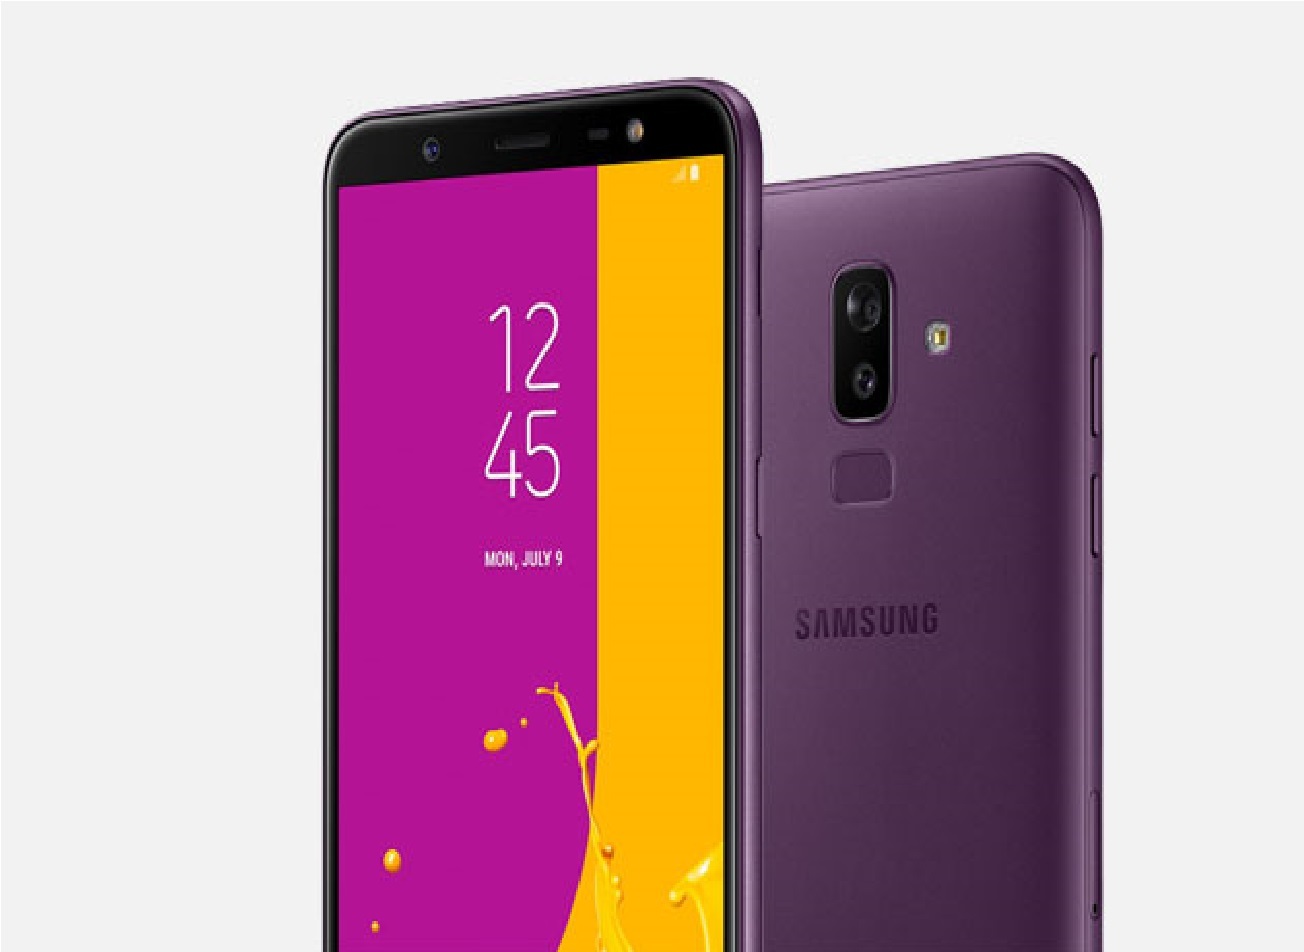 Samsung Galaxy J8 featured image